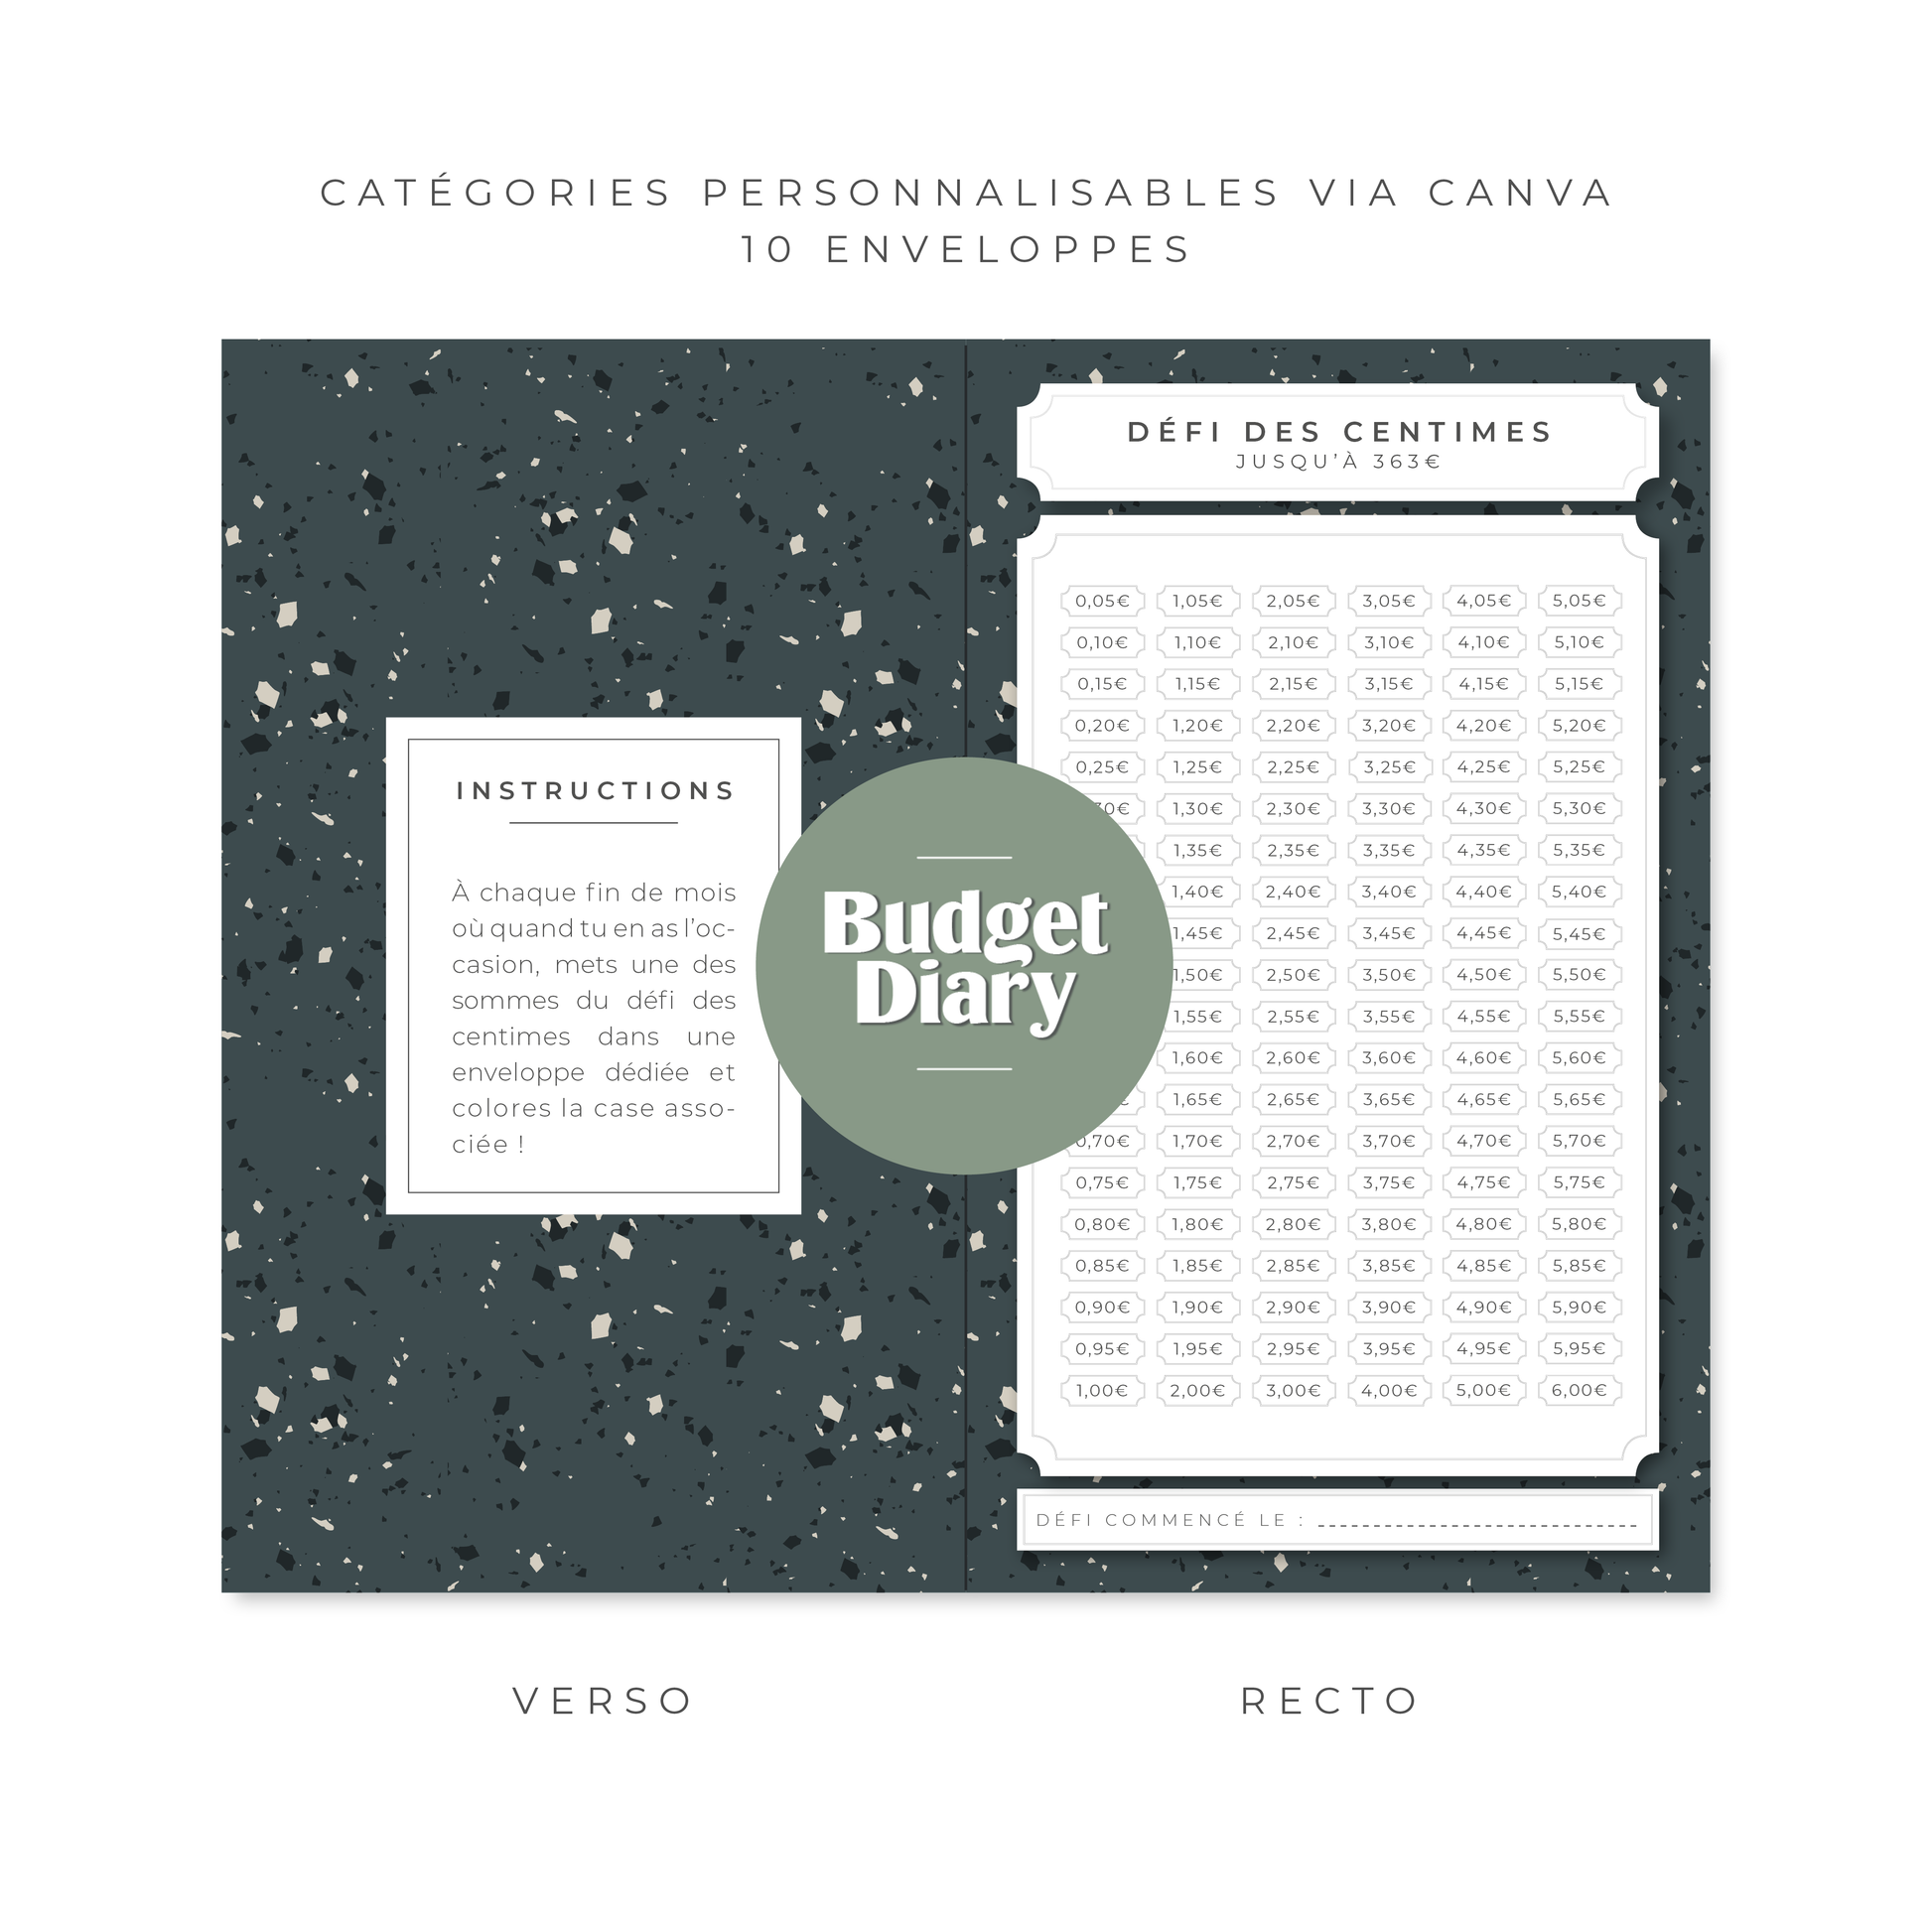 Enveloppe Budget pour classeur A6 - Terrazzo (digital) – Budget Diary